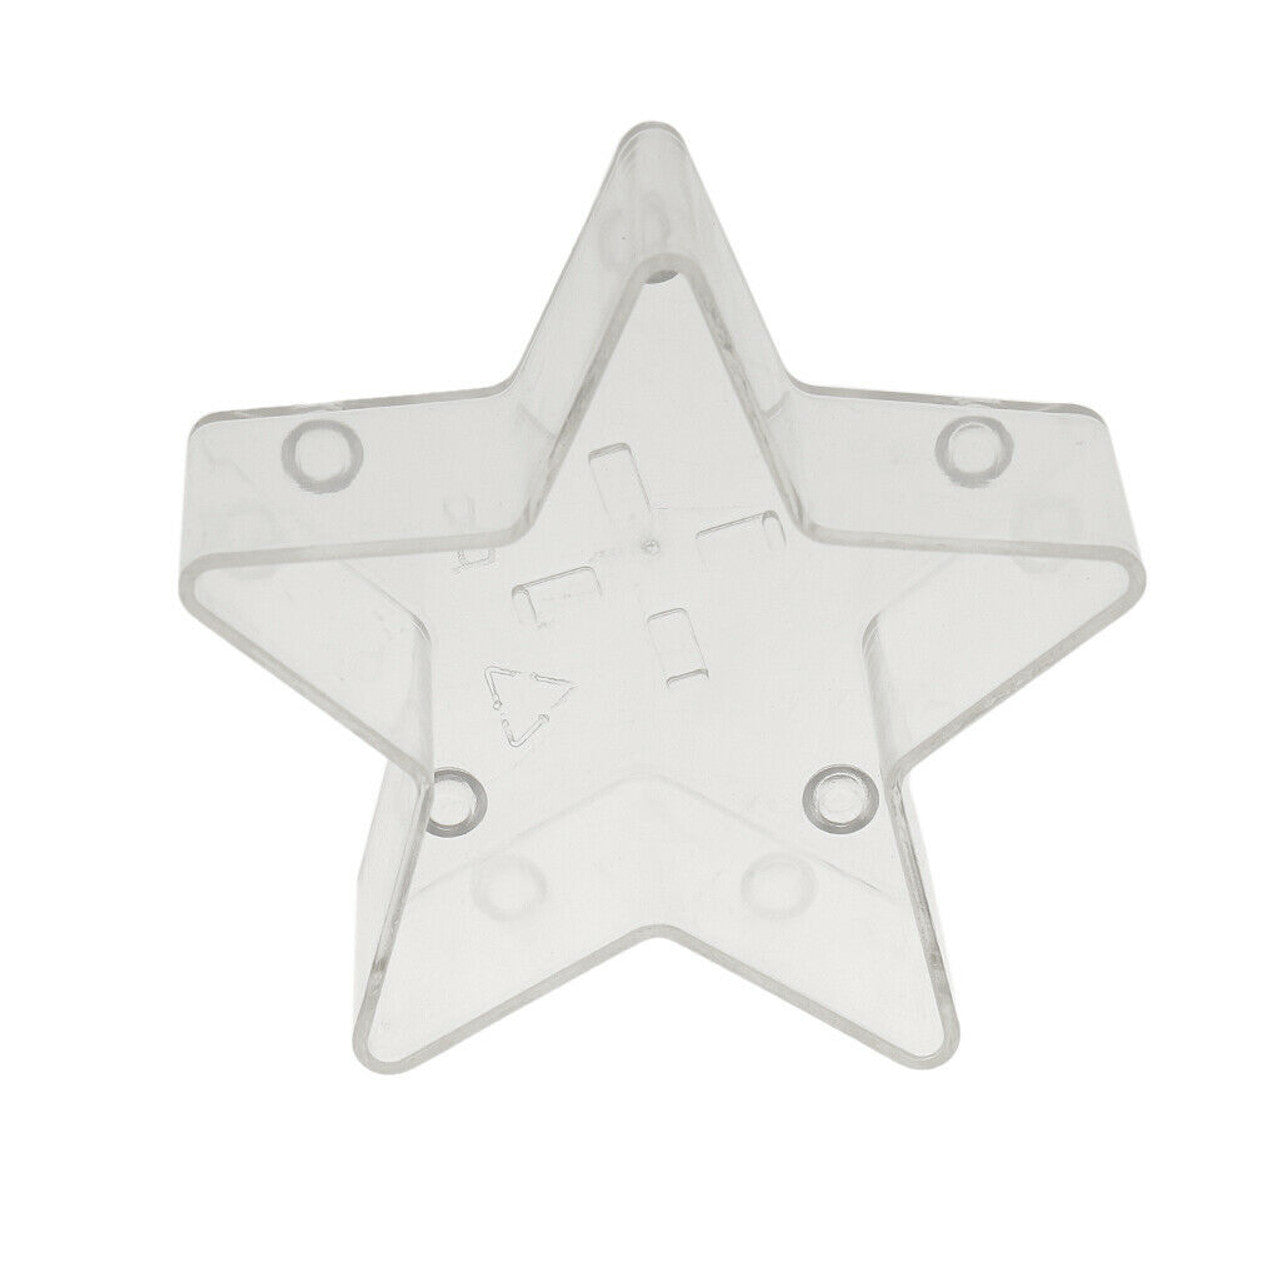 AuraDecor PolyCarbonate Cups Star Shape